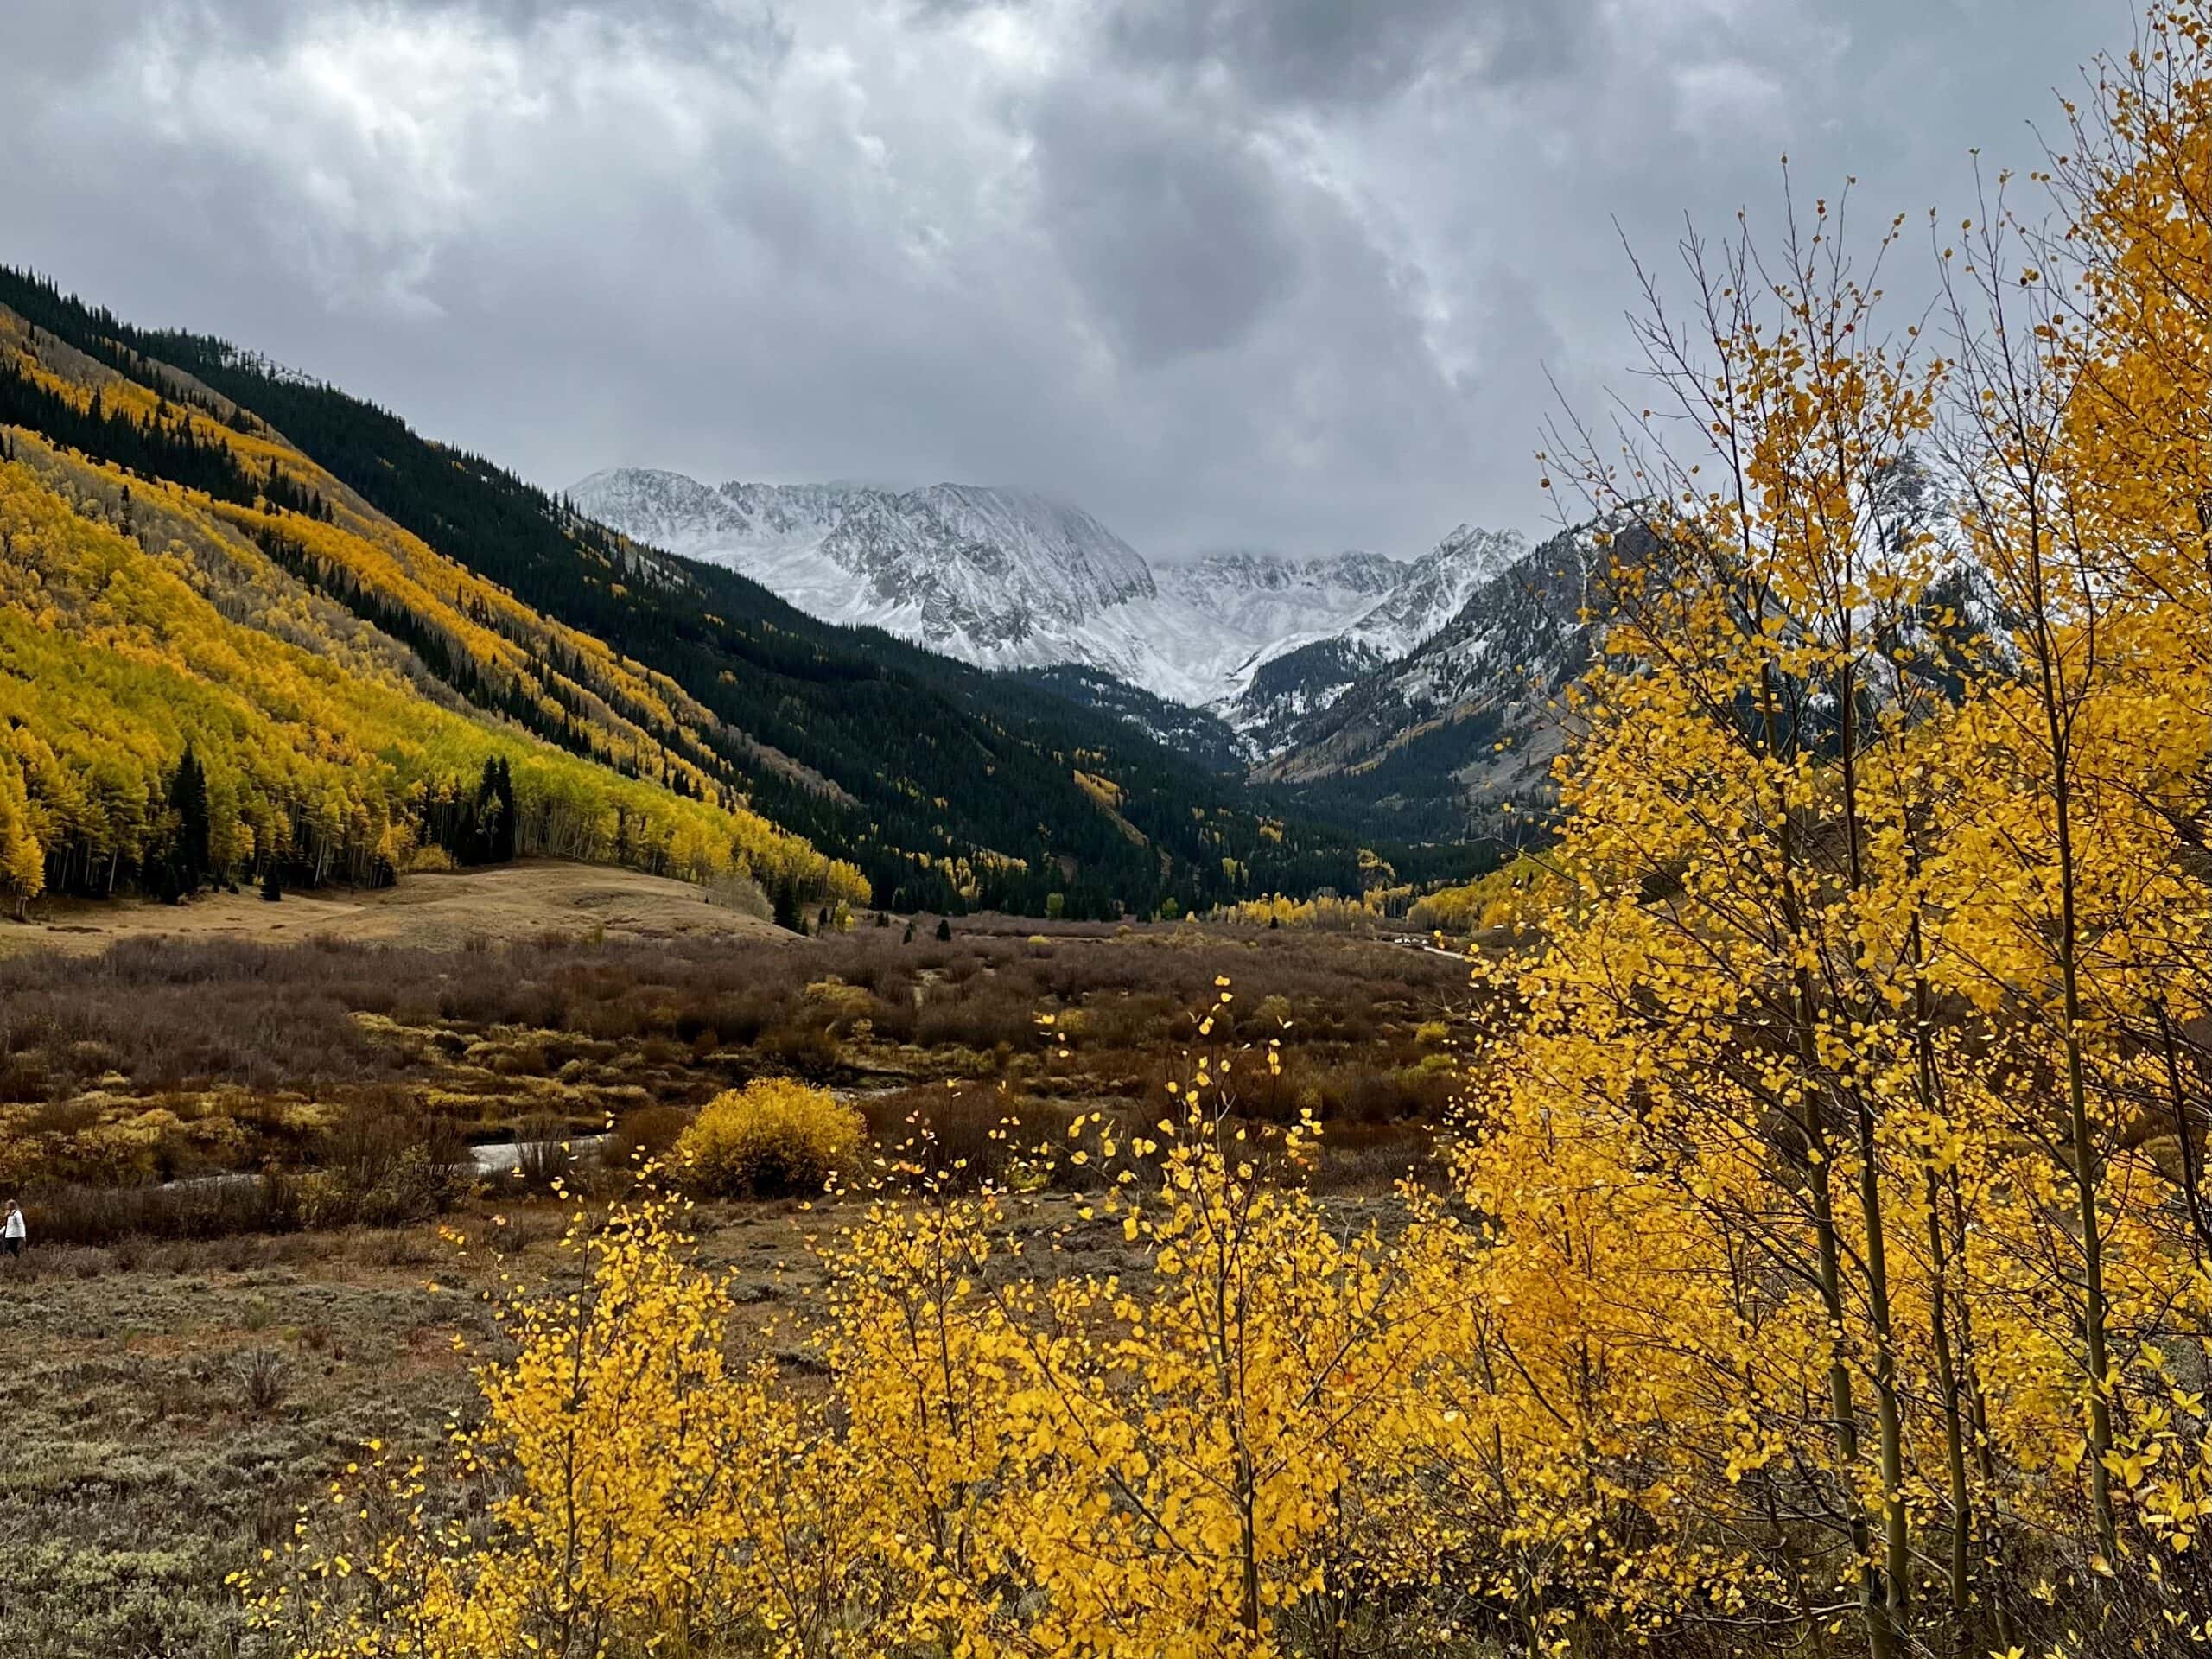 Aspen trees turn yellow during autumn in the Maroon Bells region